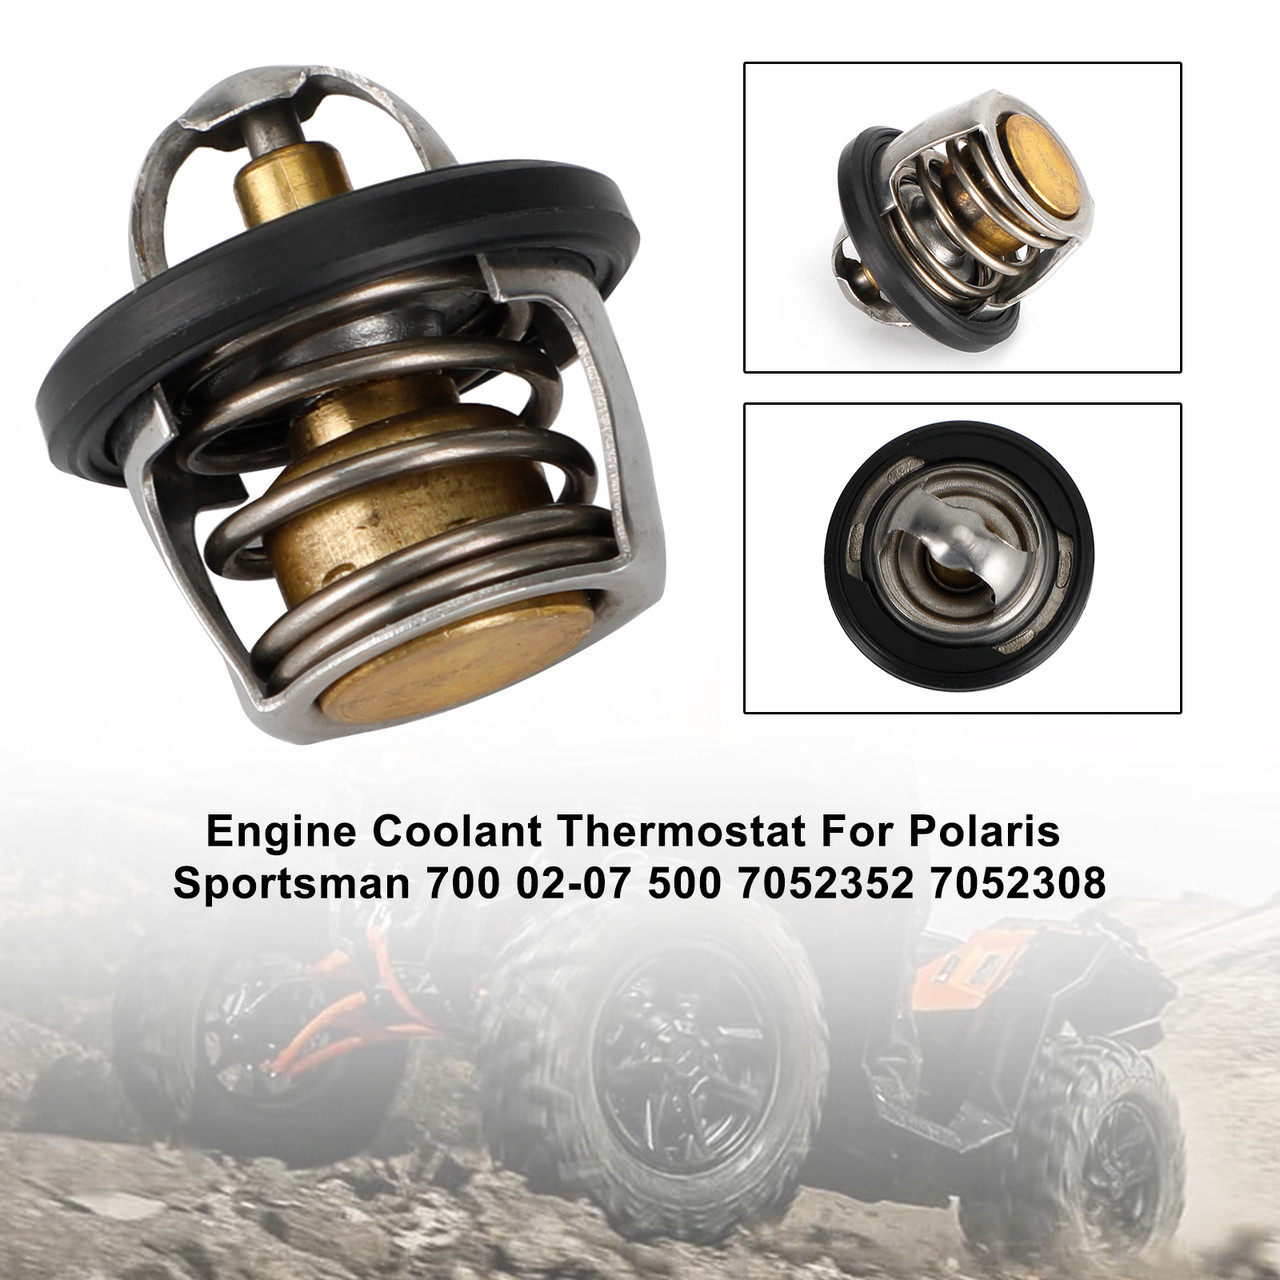 Engine Coolant Thermostat For Polaris Sportsman 700 02-07 500 7052352 7052308